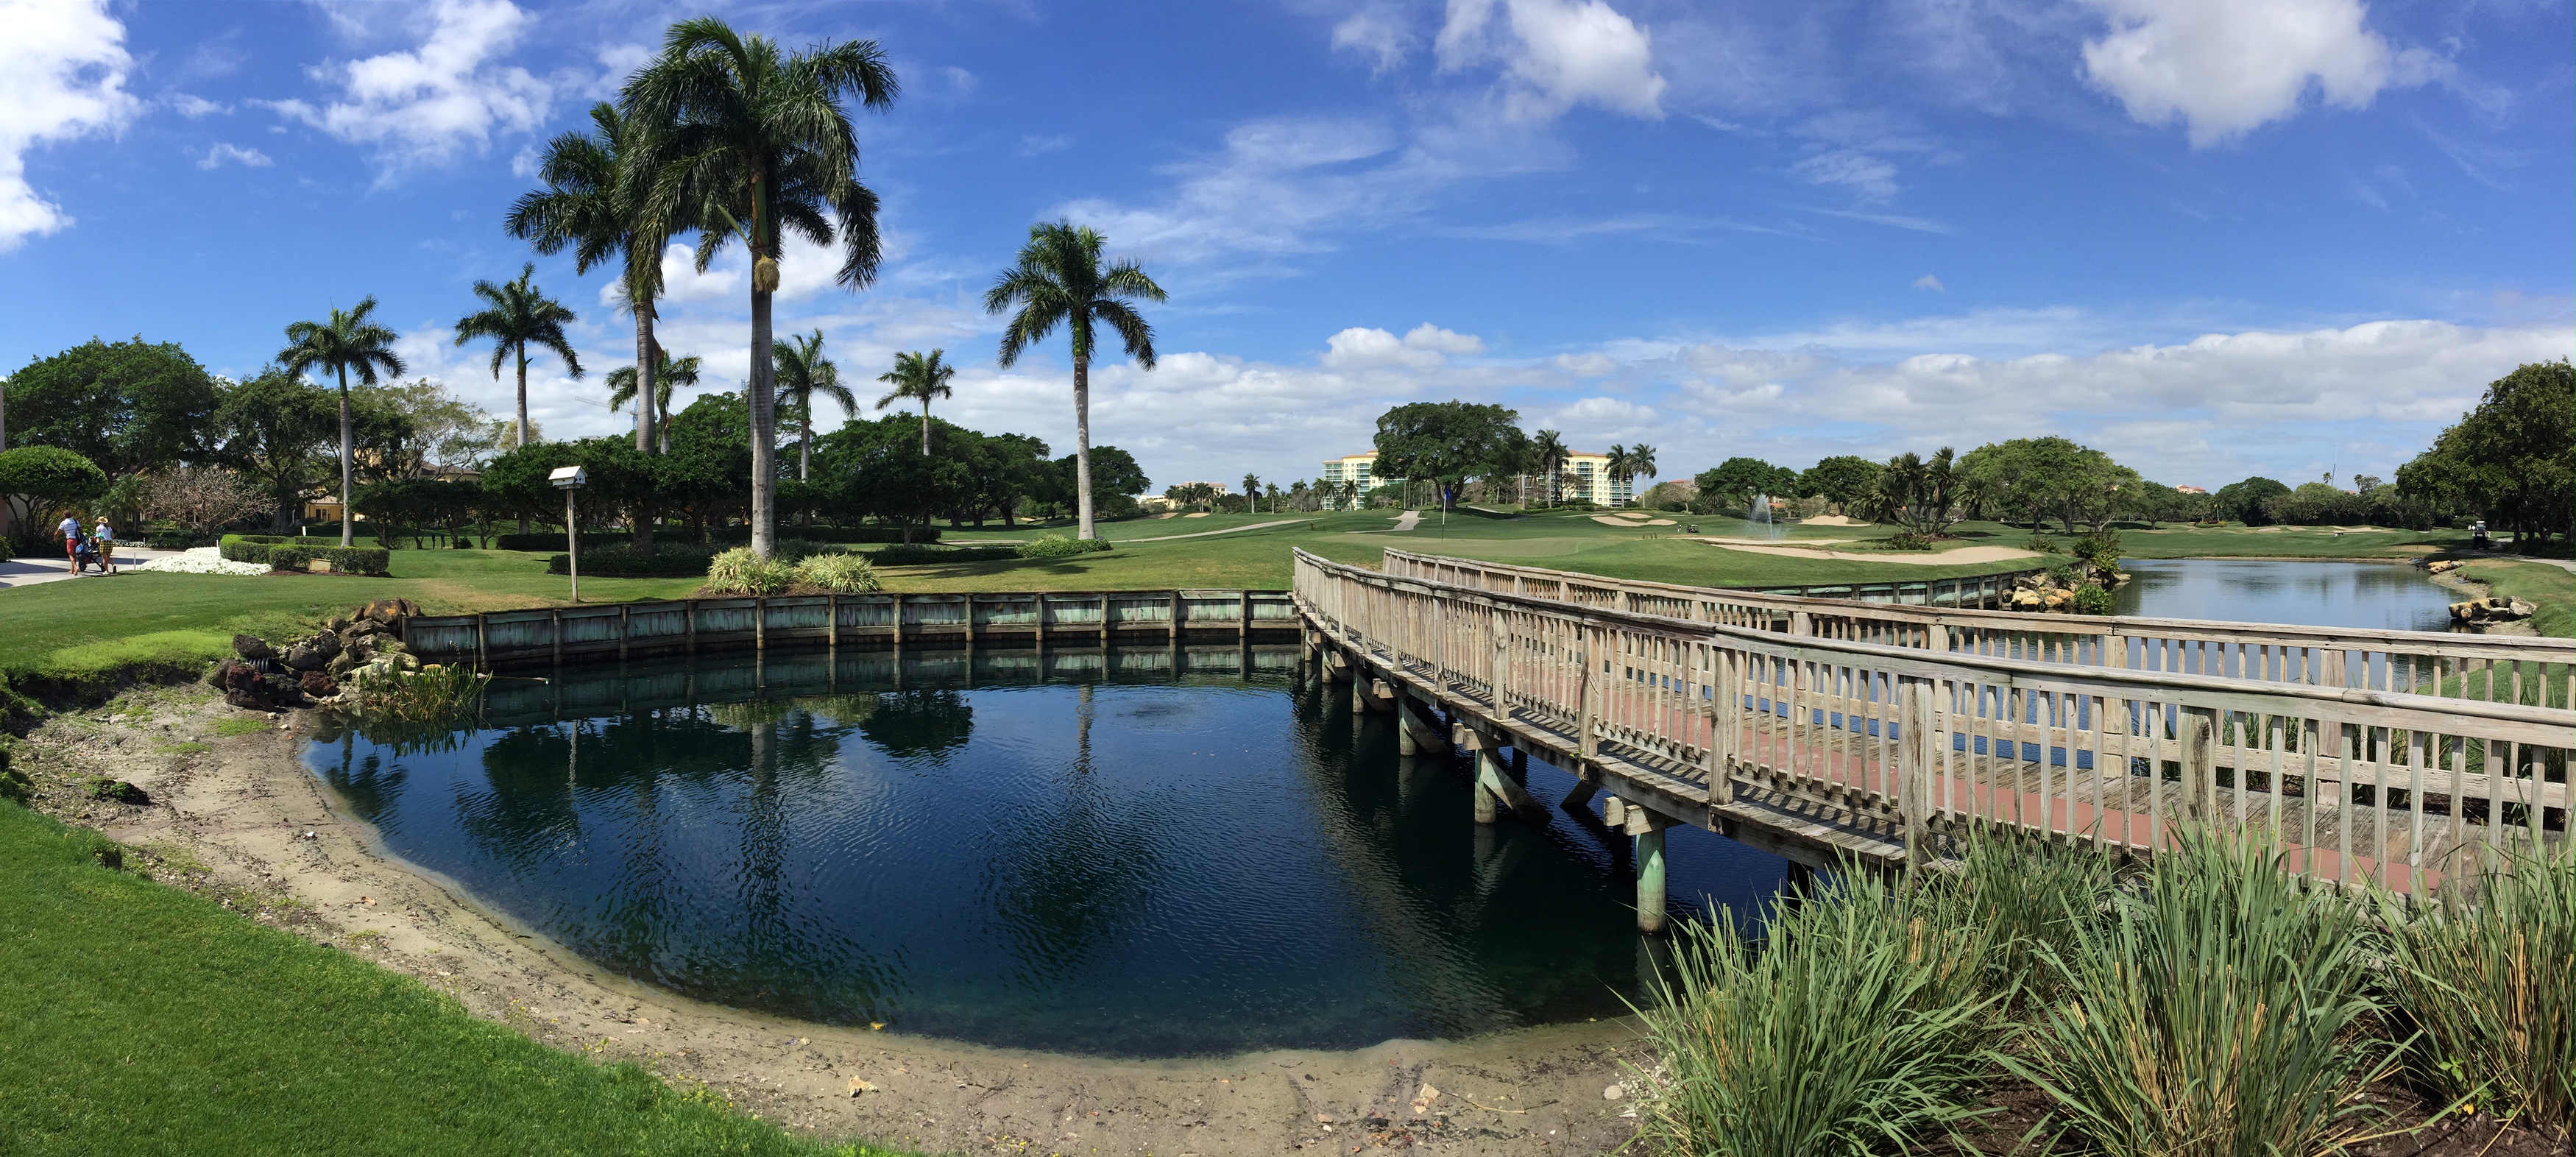 Boca Resort Club - Grounds Championship Golf Course